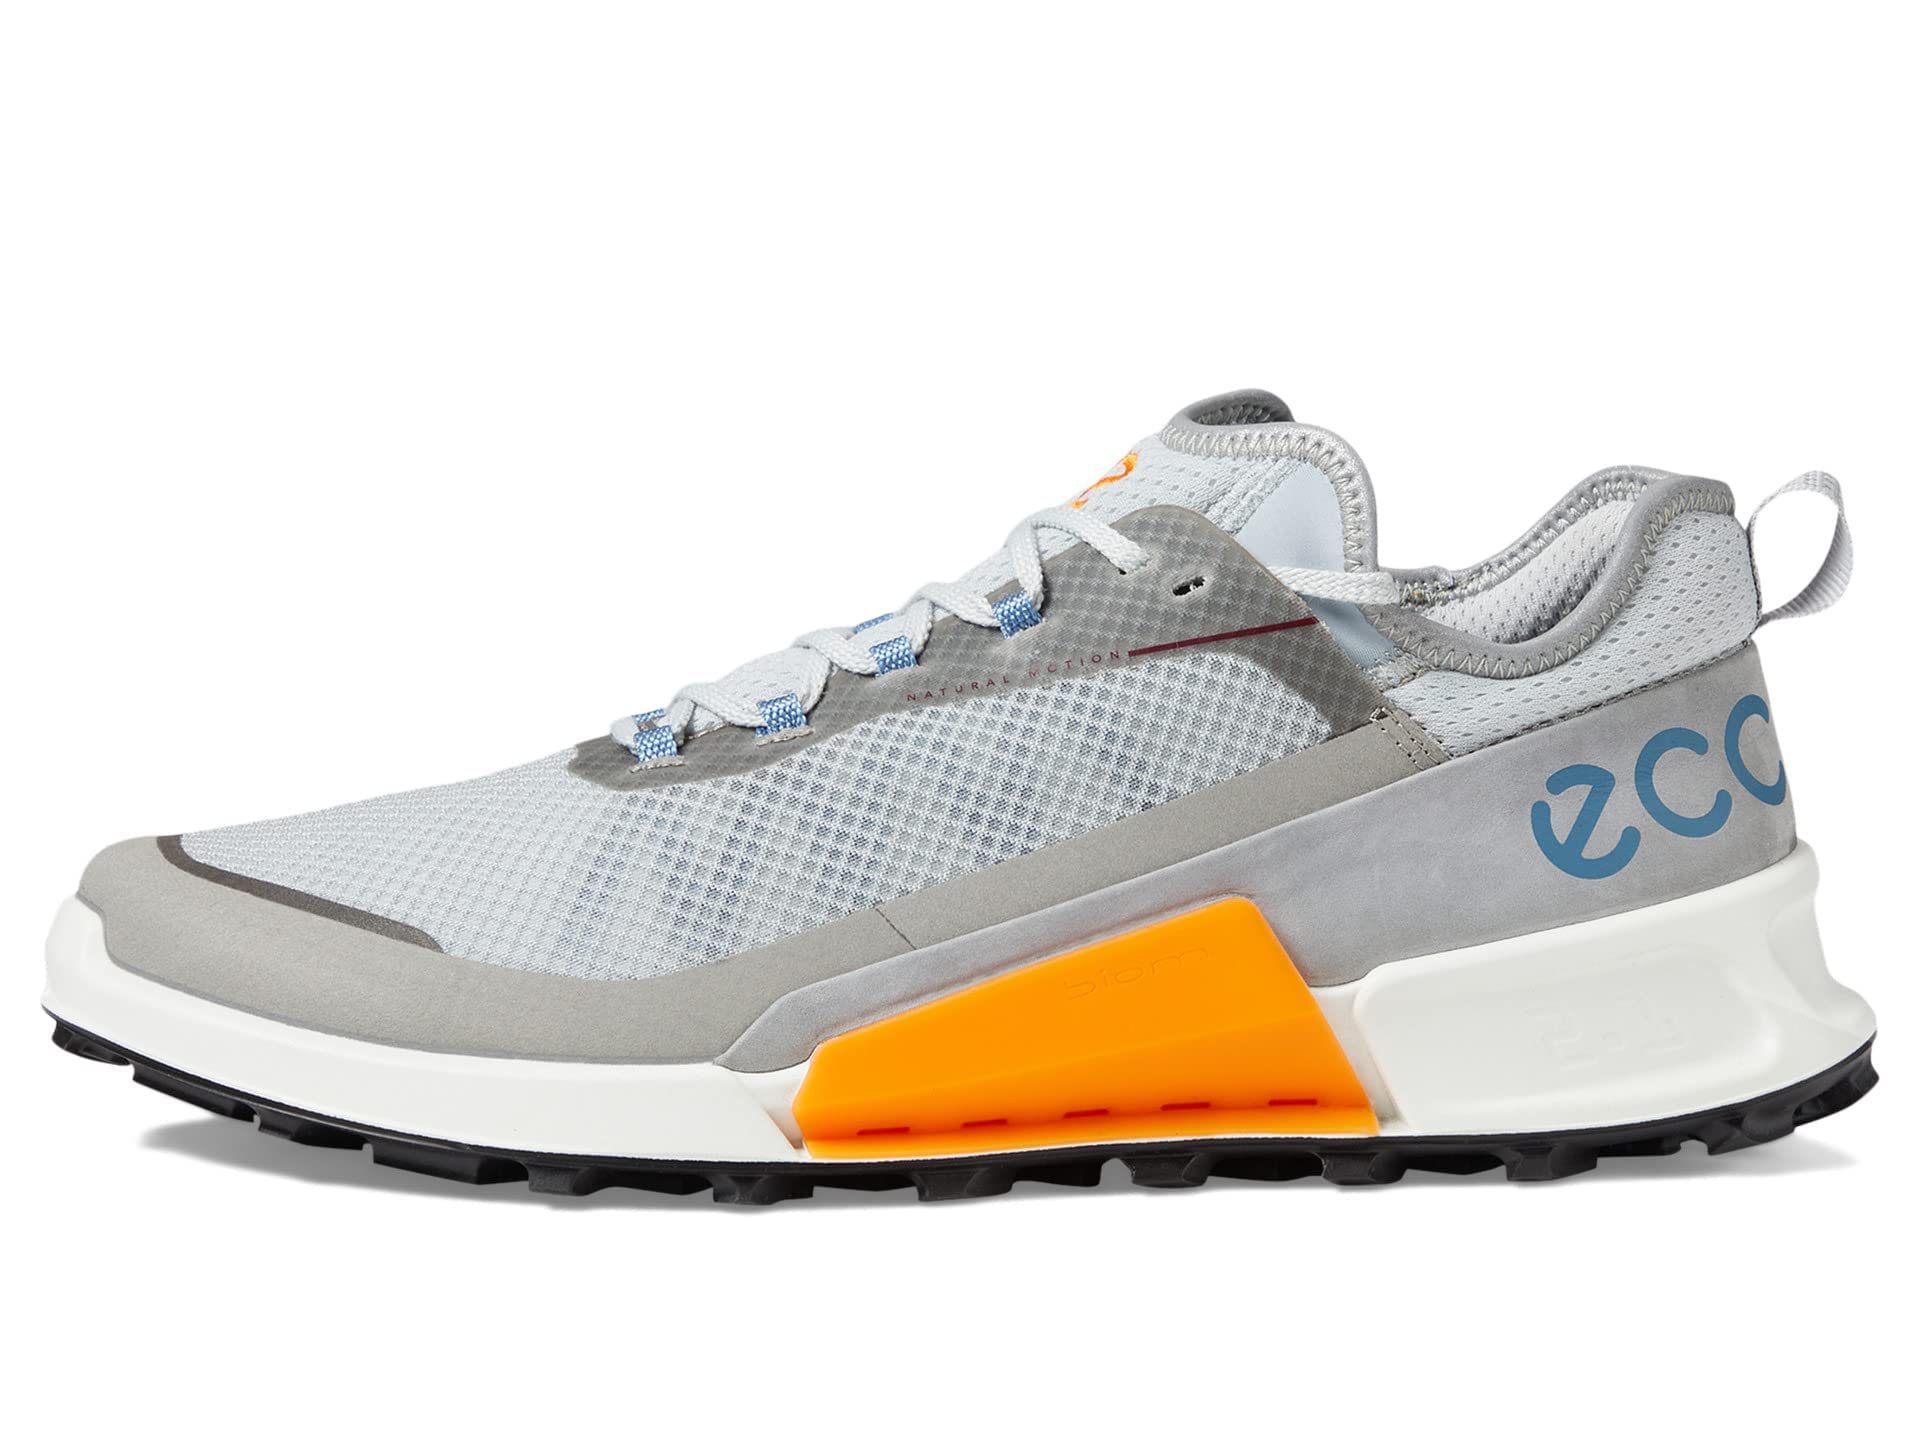 ECCO Men's Biom 2.1 Low Textile Trail Running Shoe